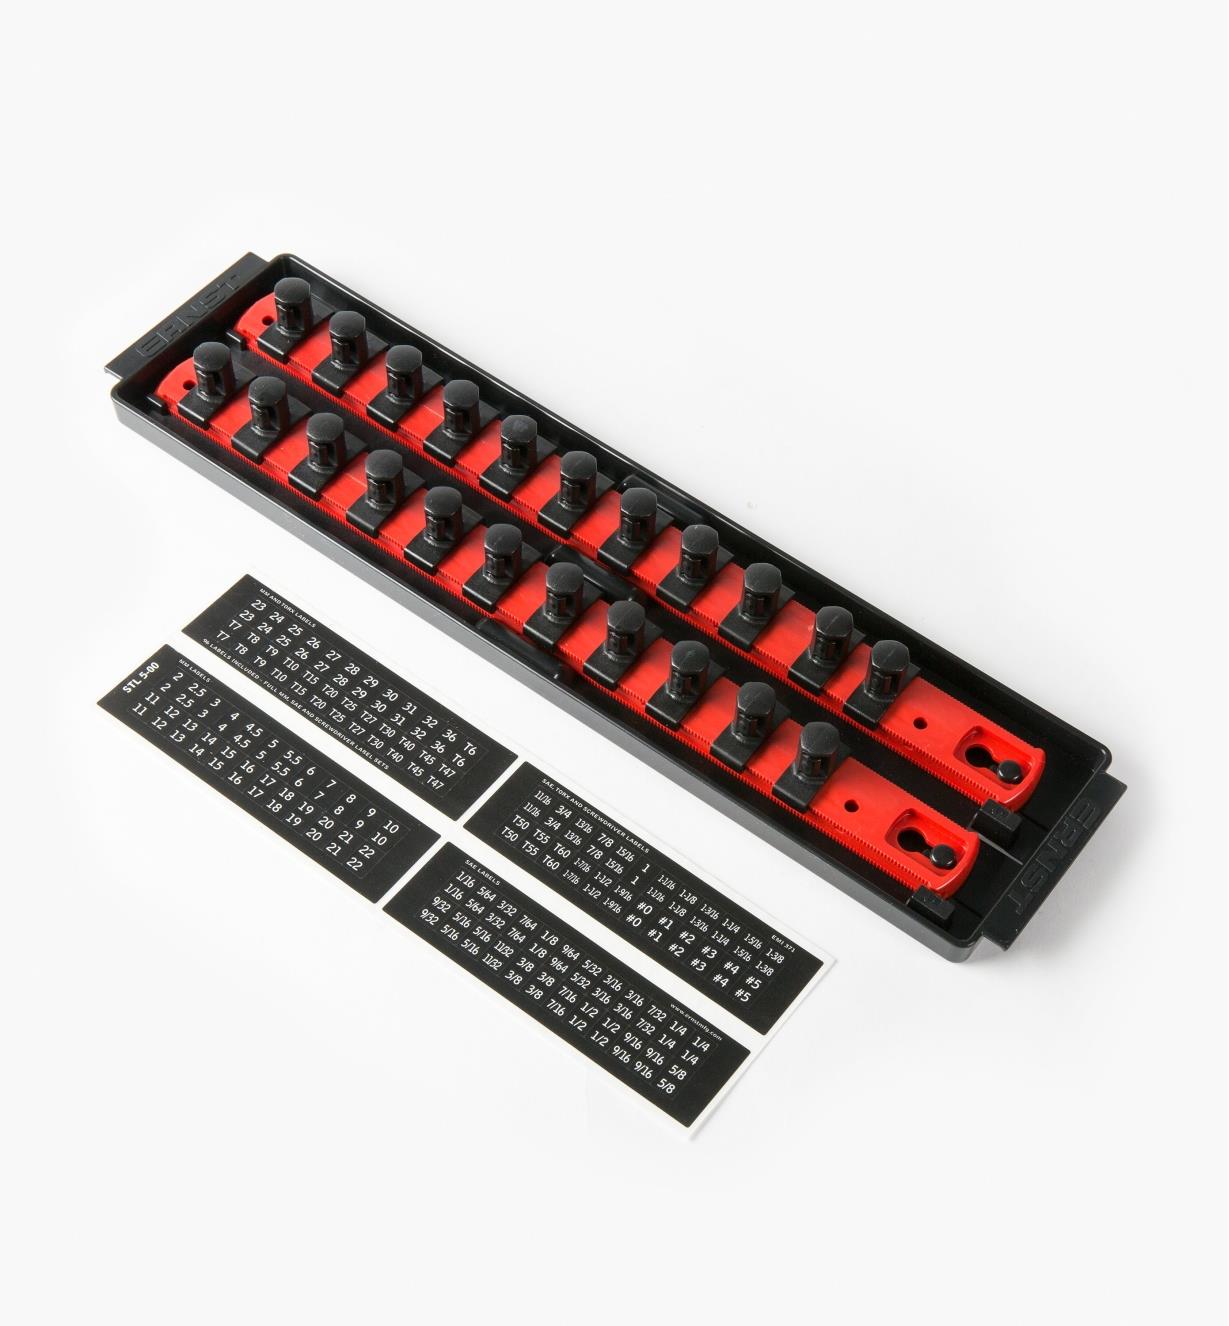 27K8042 - 1/2" Drive Socket Organizer Set (1 Tray, 2 × 13" Rails, 22 pegs)